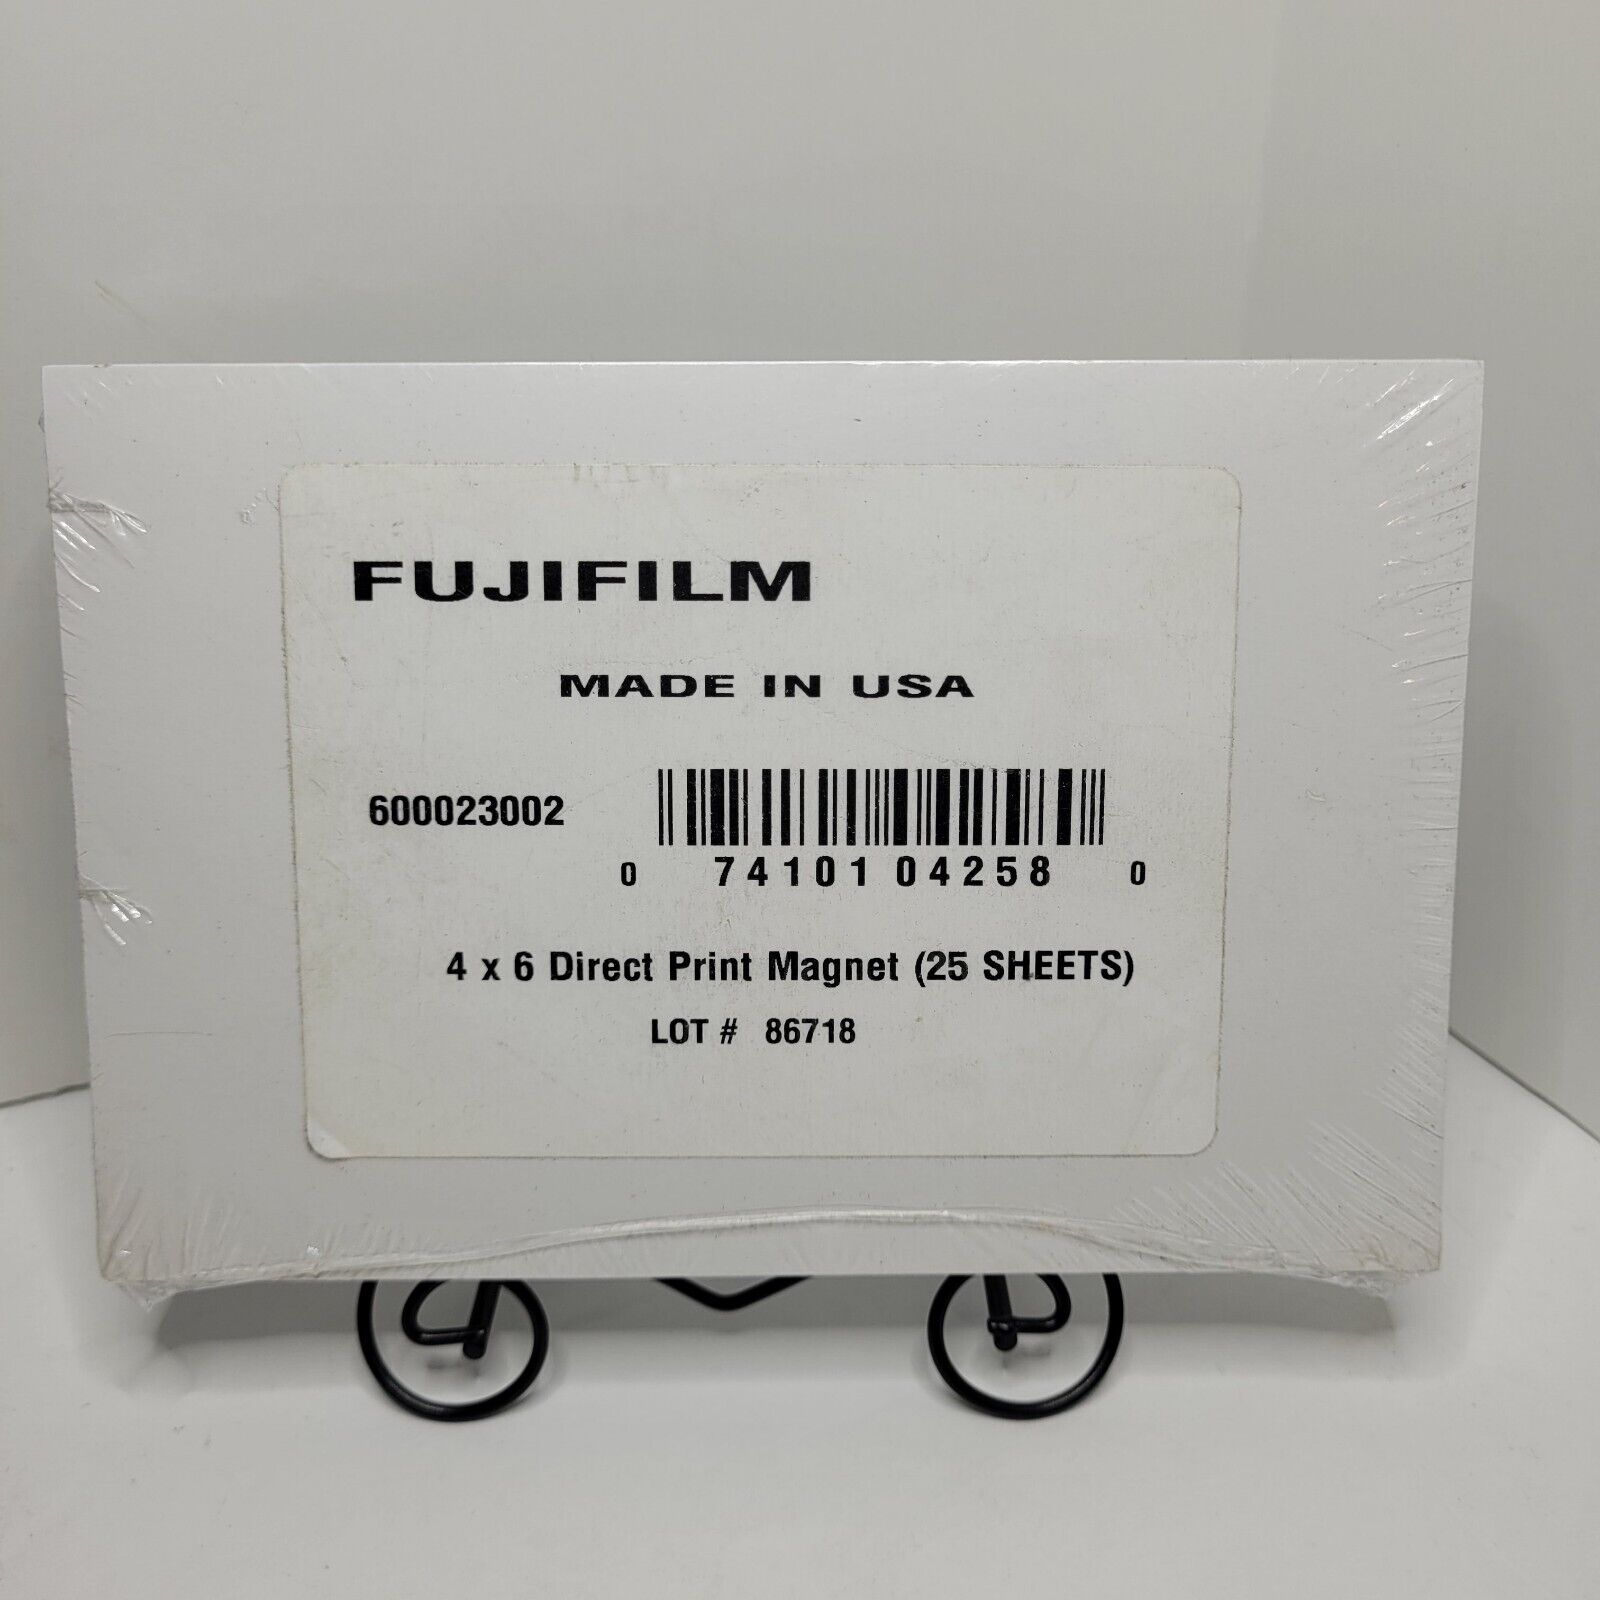 Fuji Film 4 x 6 Direct Print Magnet 25 Sheets Sheet Pack